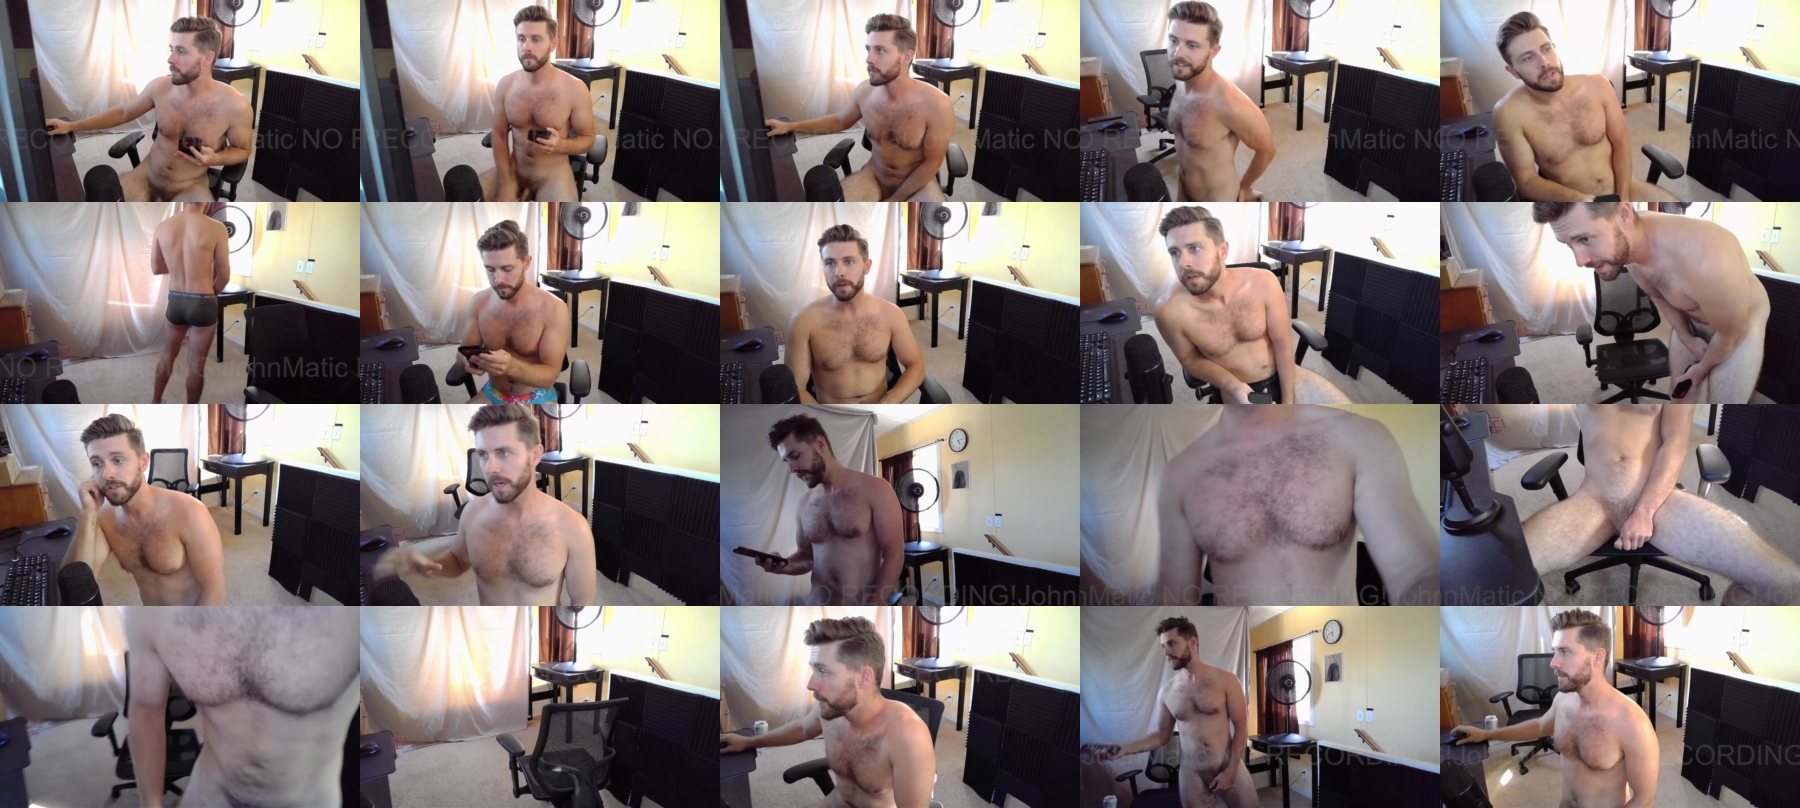 Johnmatic  31-07-2021 Male Webcam